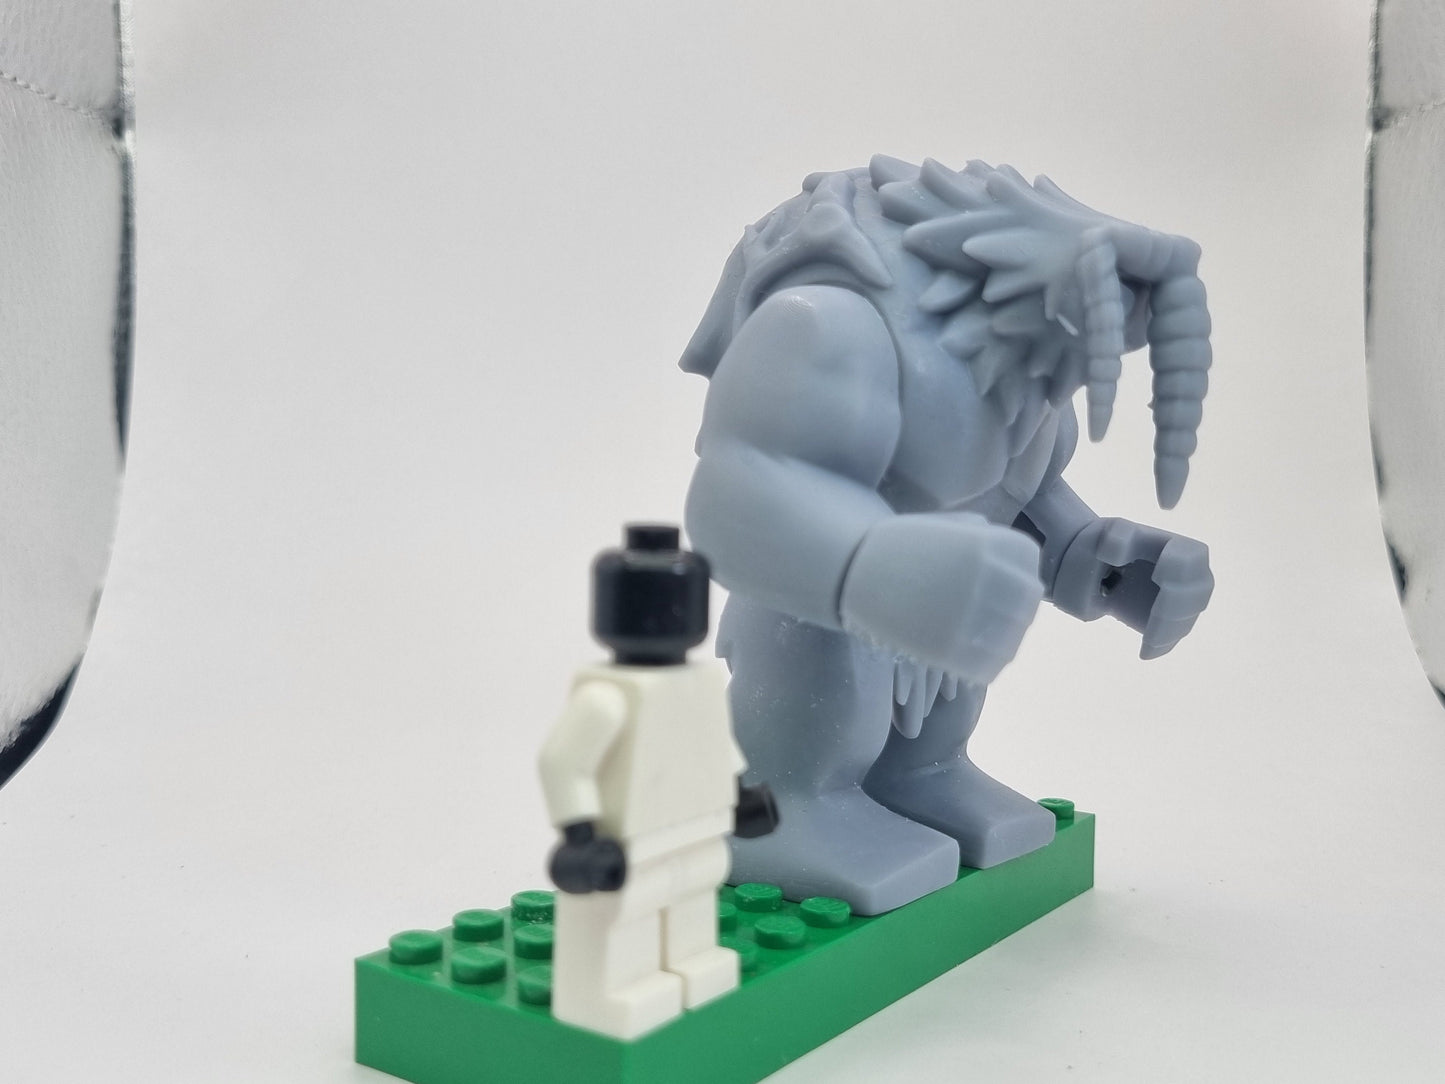 Building toy super heroes swamp monster big fig!